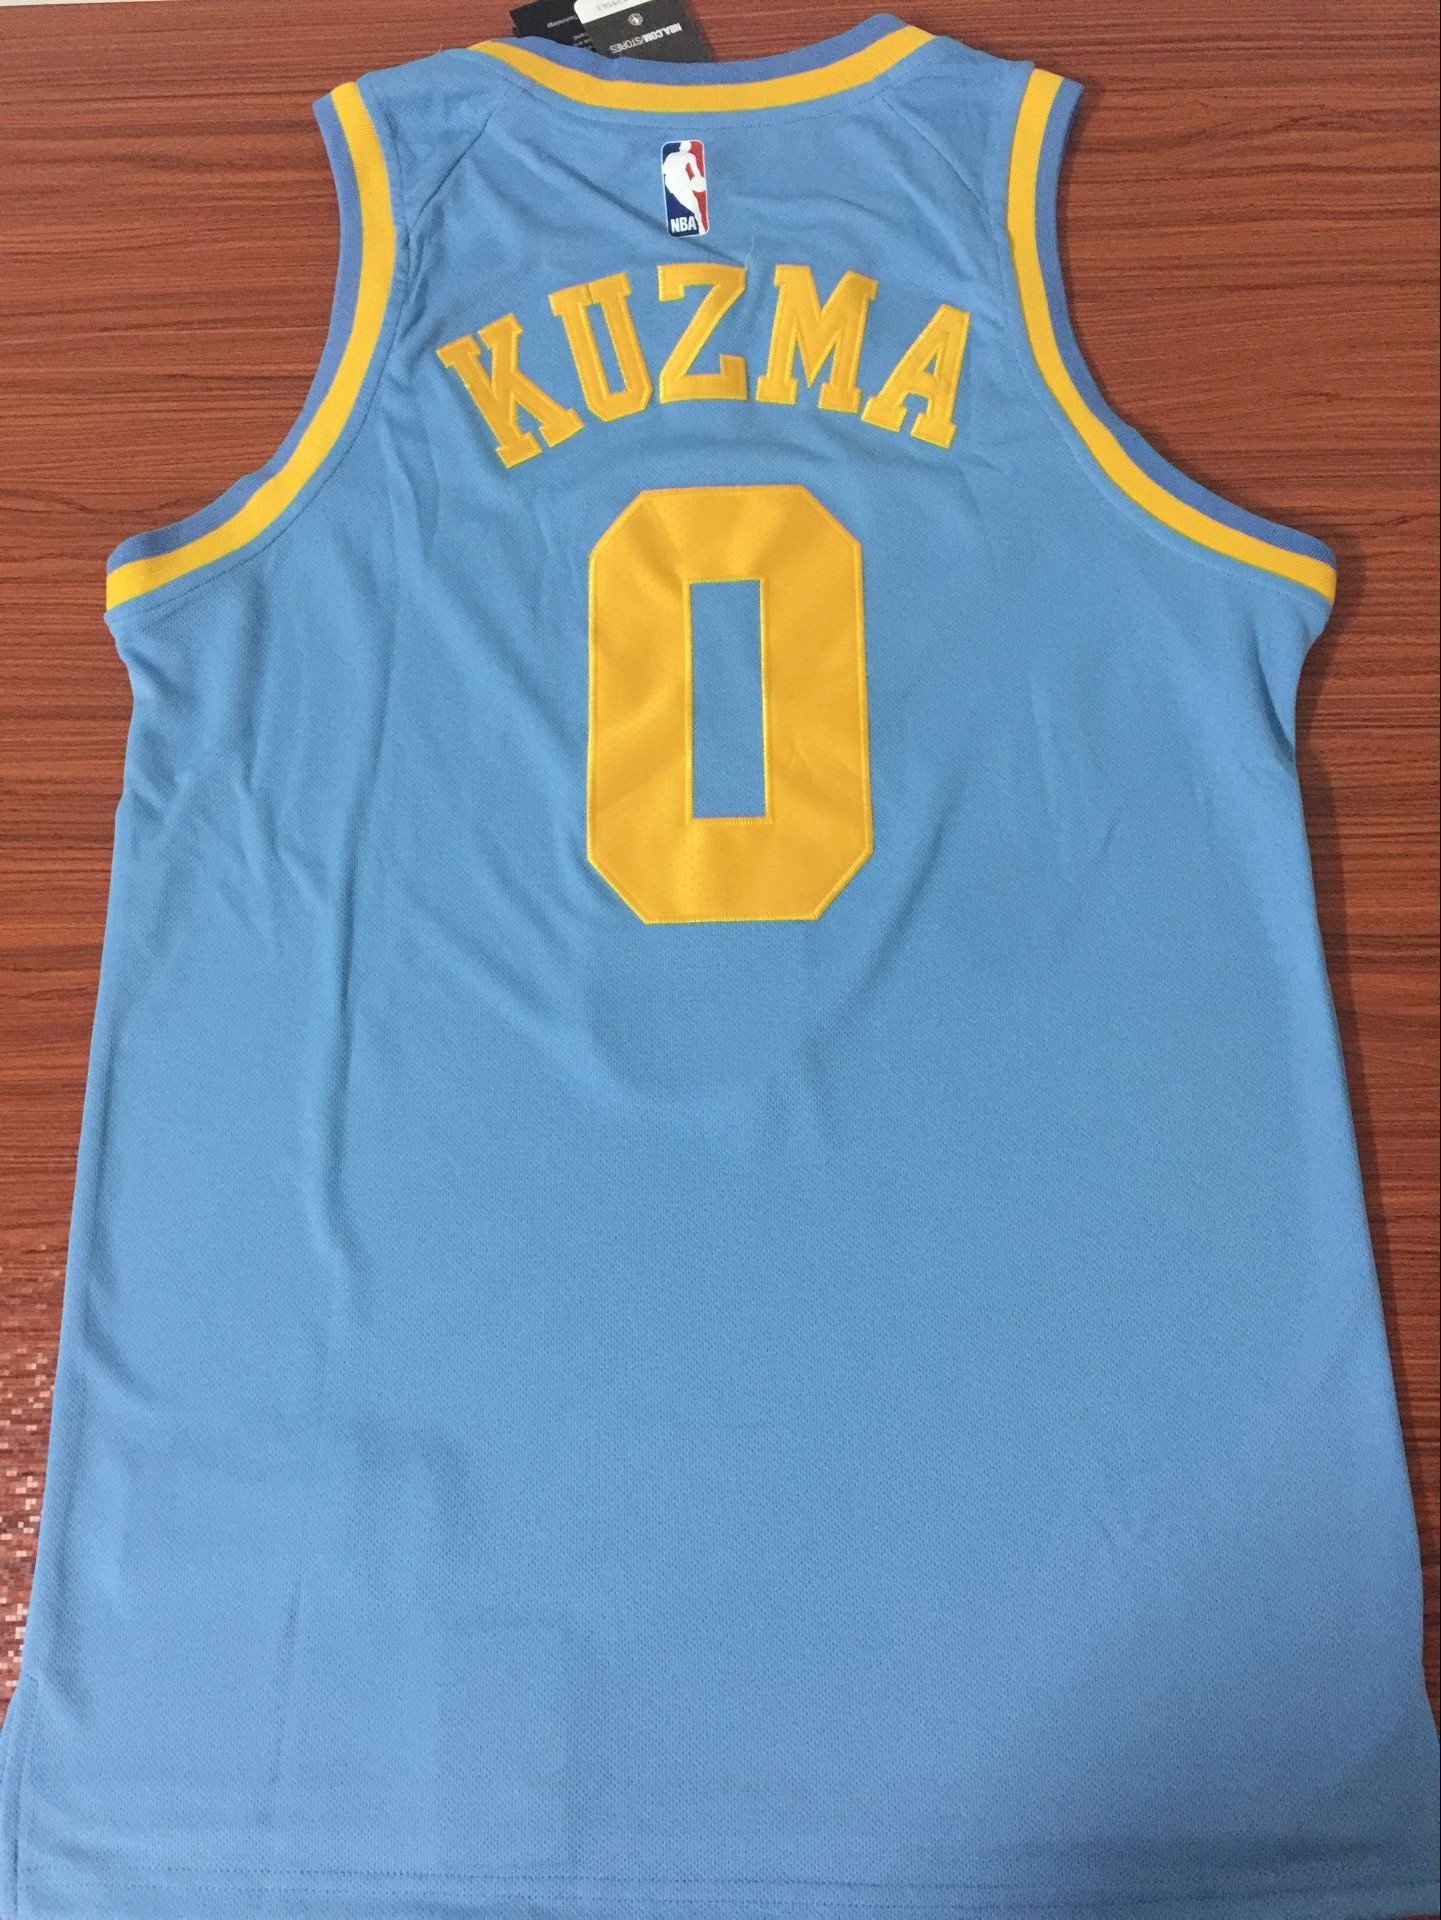 Kyle Kuzma - Los Angeles Lakers Classic 